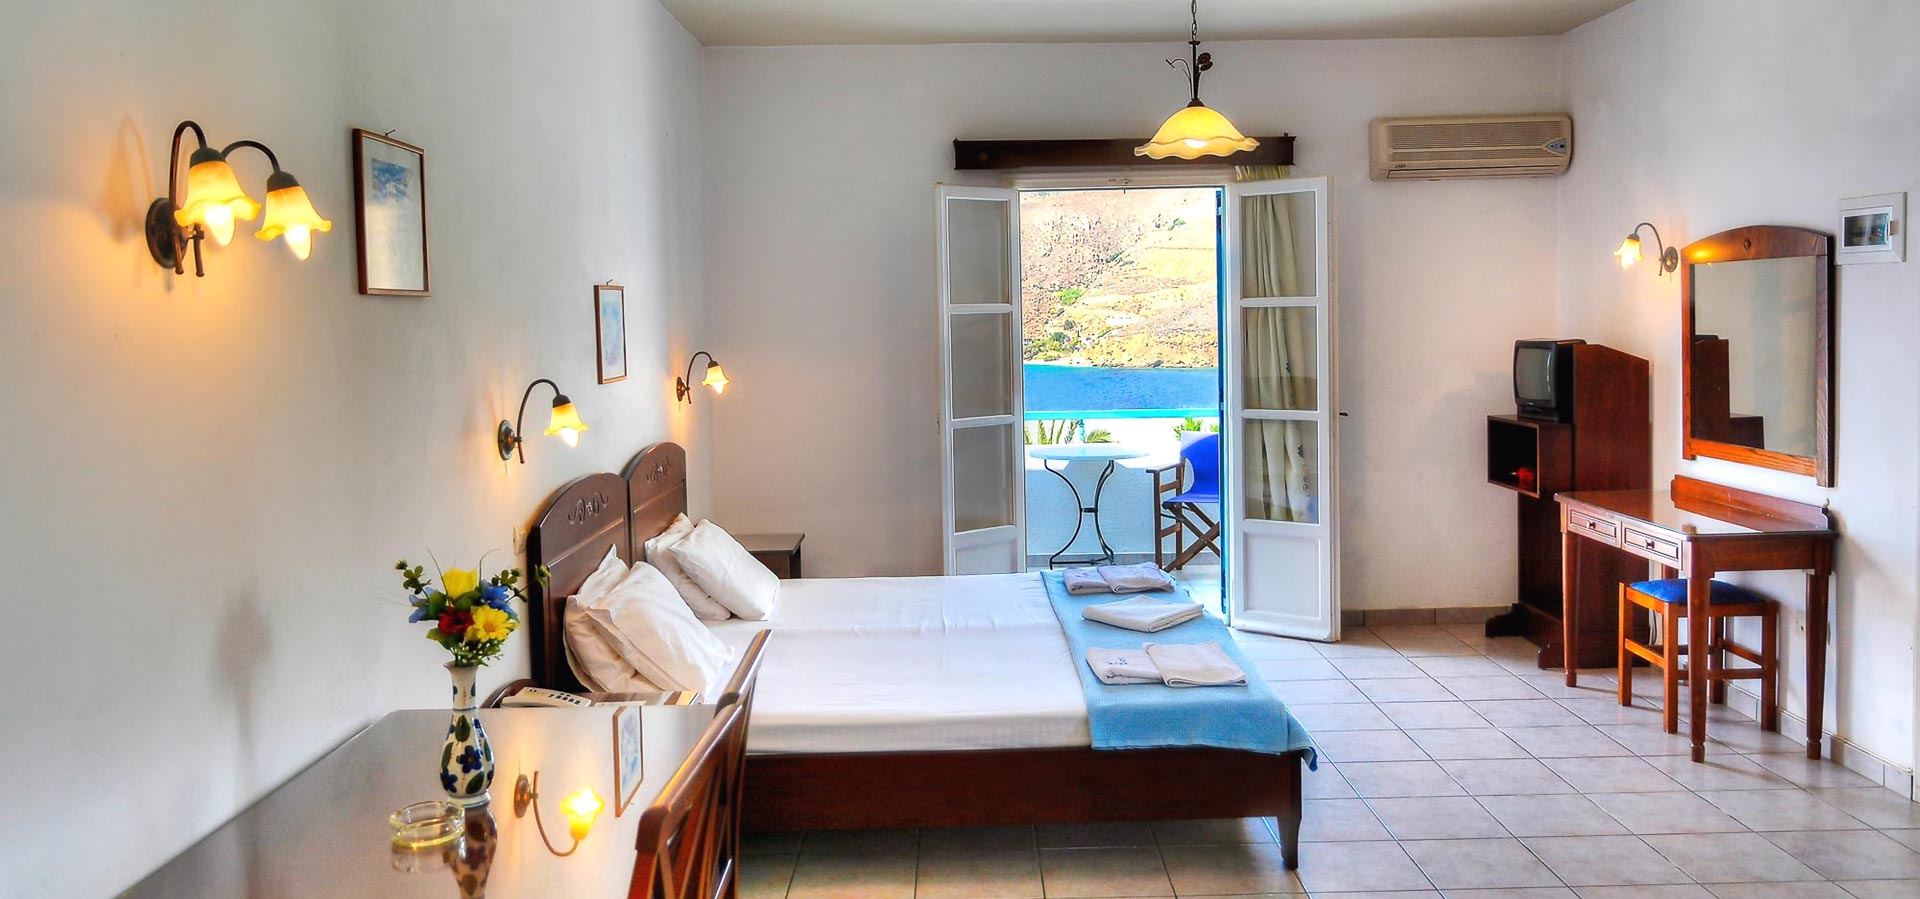 Gryspos Hotel Amorgos - Rooms to Rent